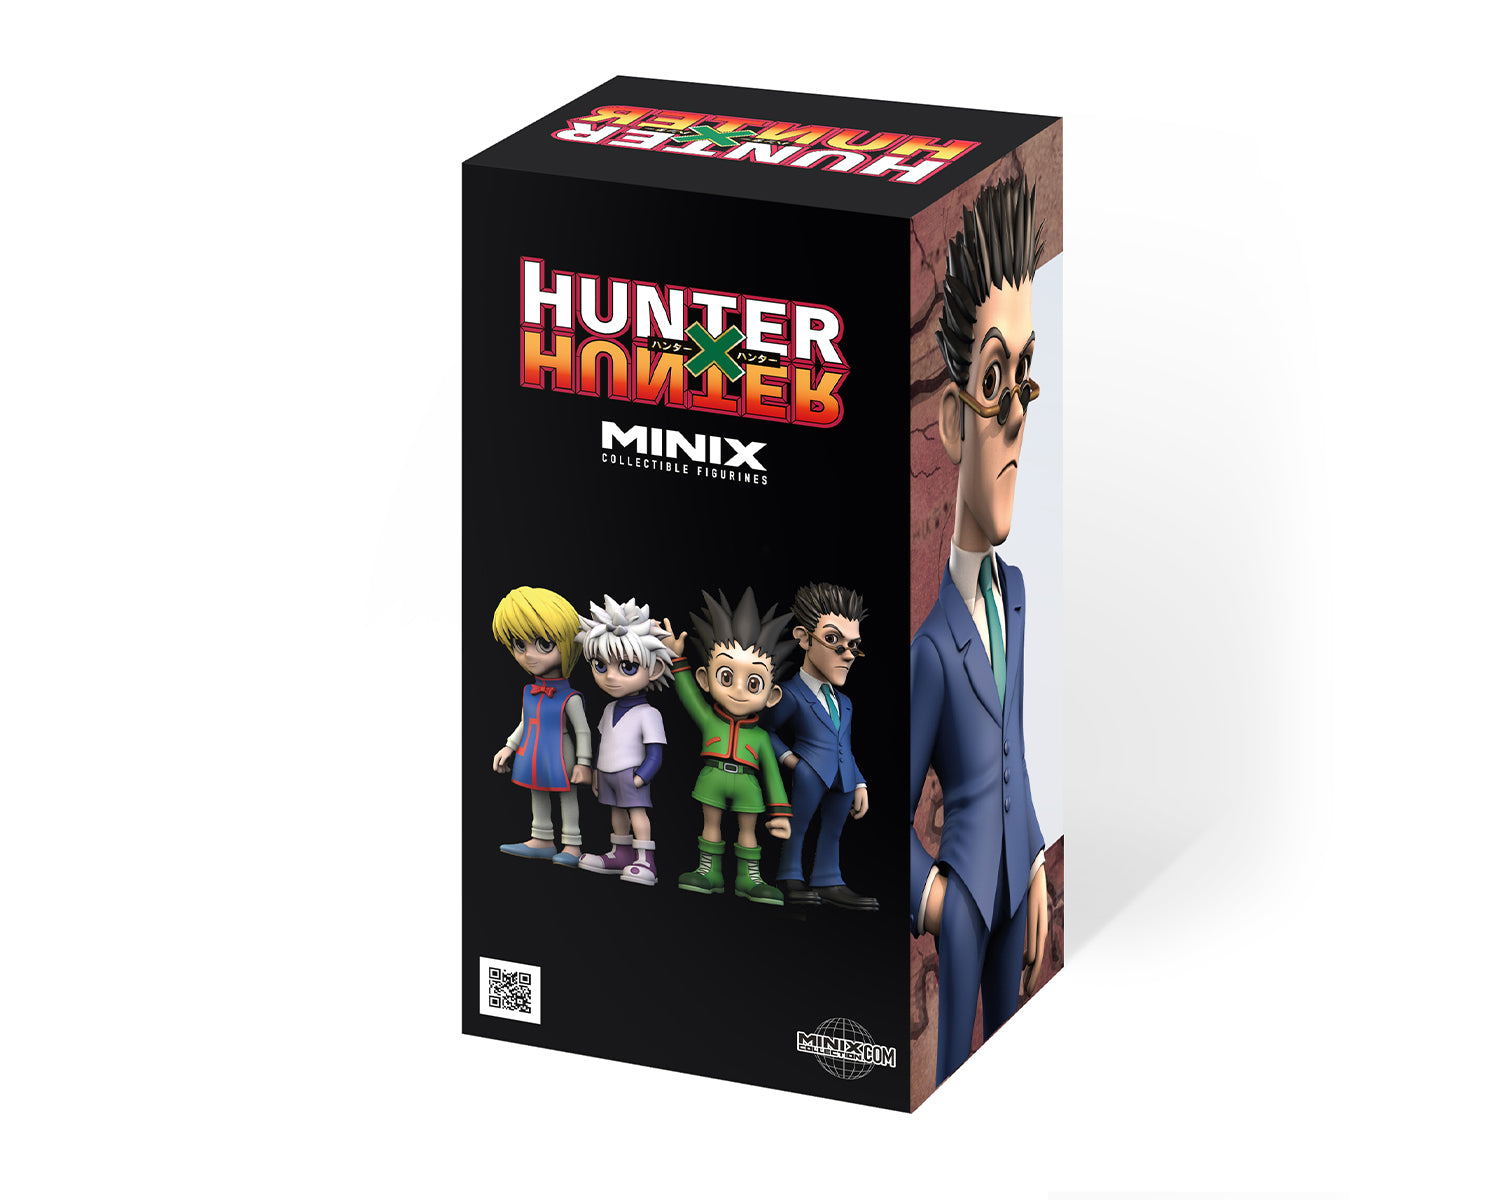 Minix - Anime #110 - Hunter X Hunter - Leorio - Figurine 12cm